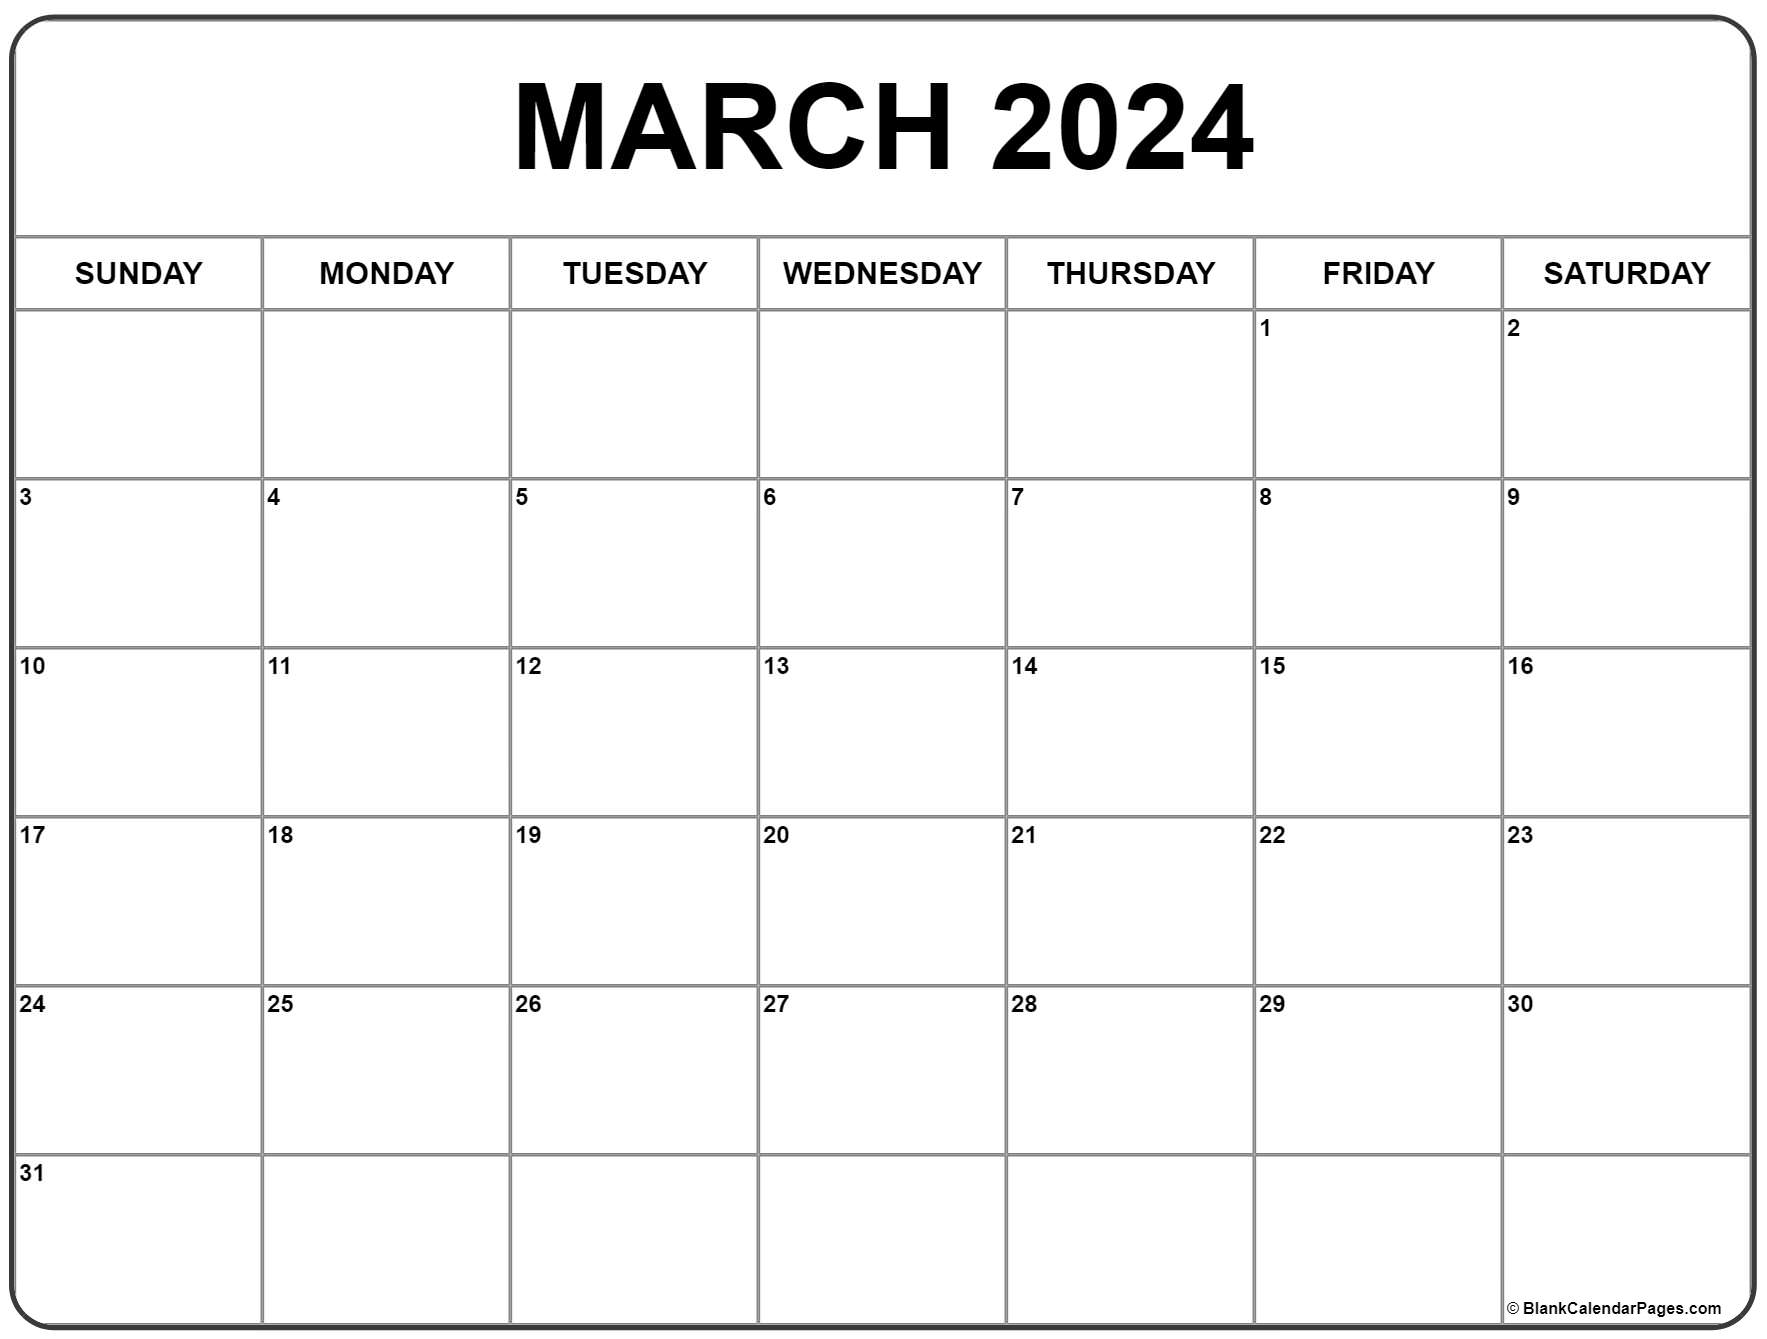 March 2024 Calendar | Free Printable Calendar for Printable Calendar 2024 March